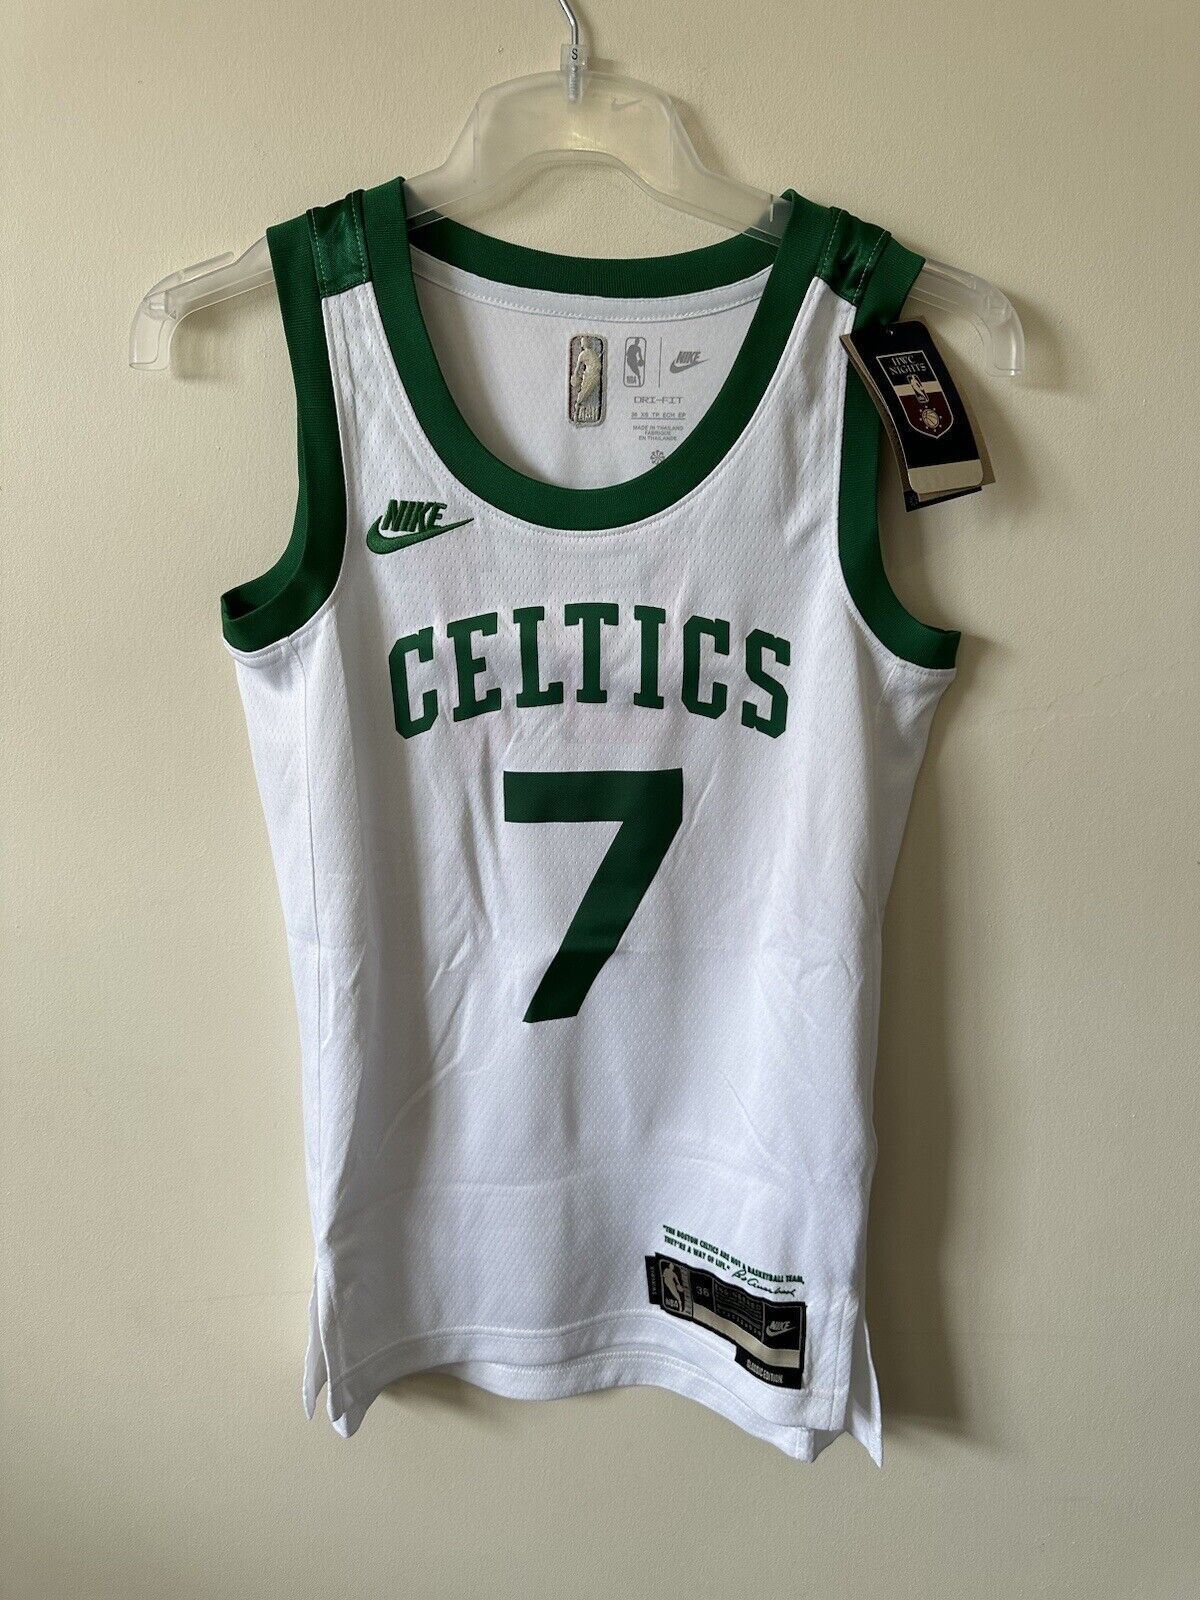 Nike NBA Boston Celtics Classic Edition Jersey BROWN 7 Basketball Mens XS